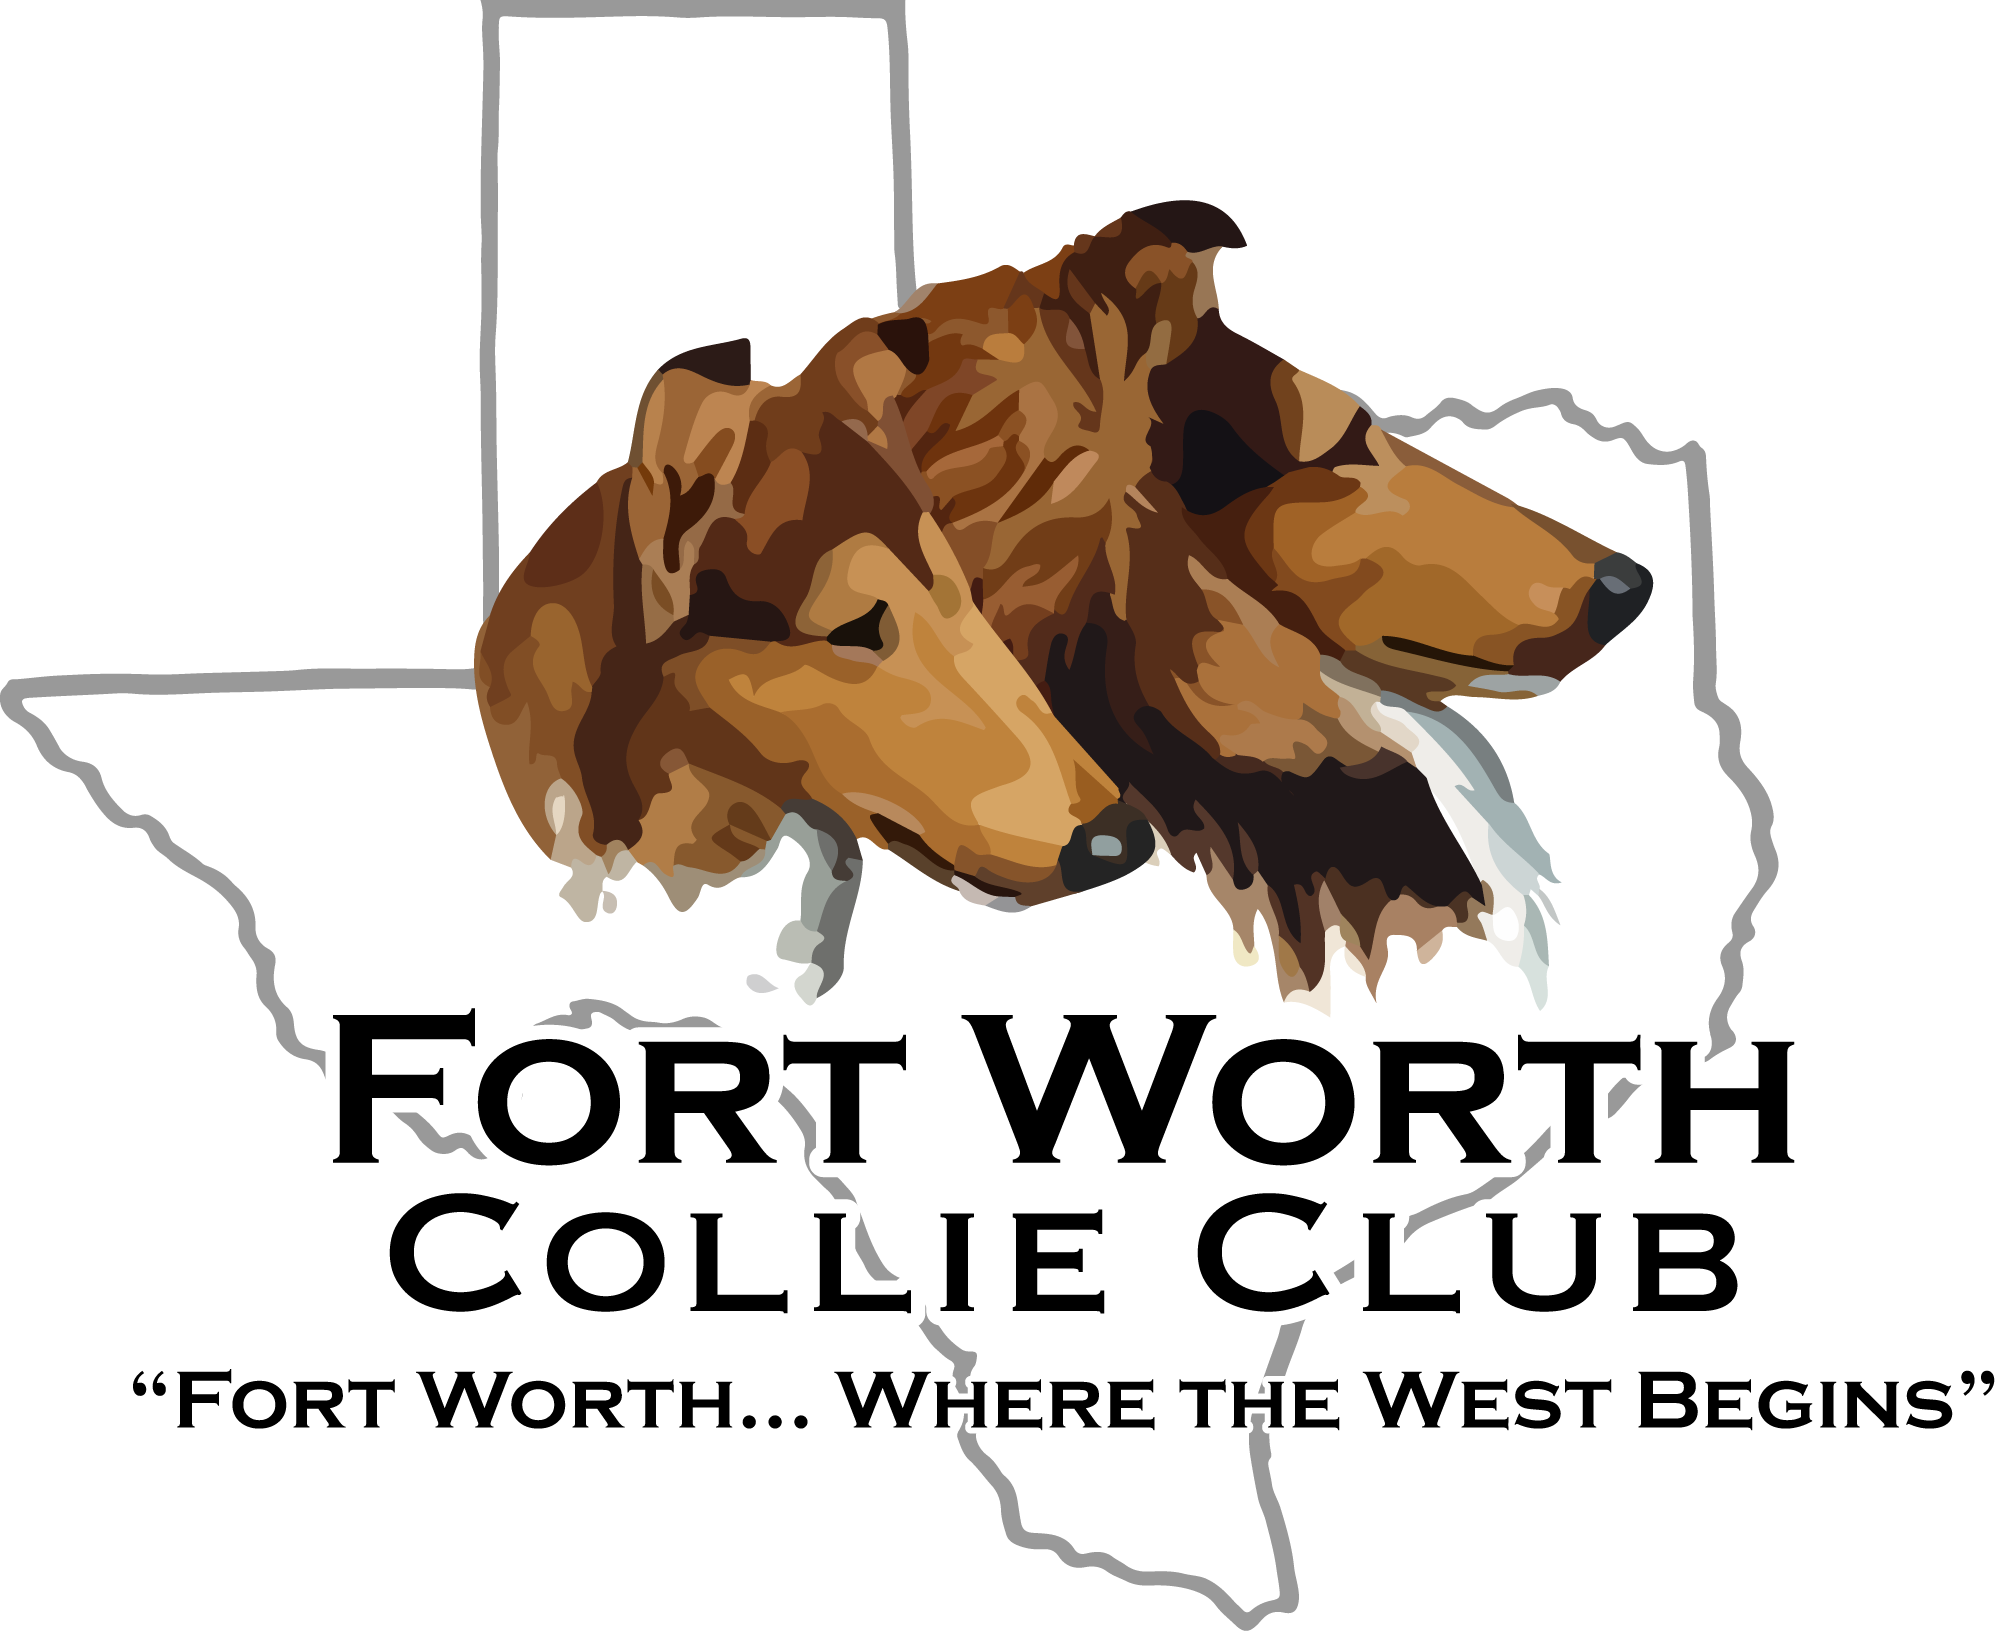 Fort Worth Collie Club